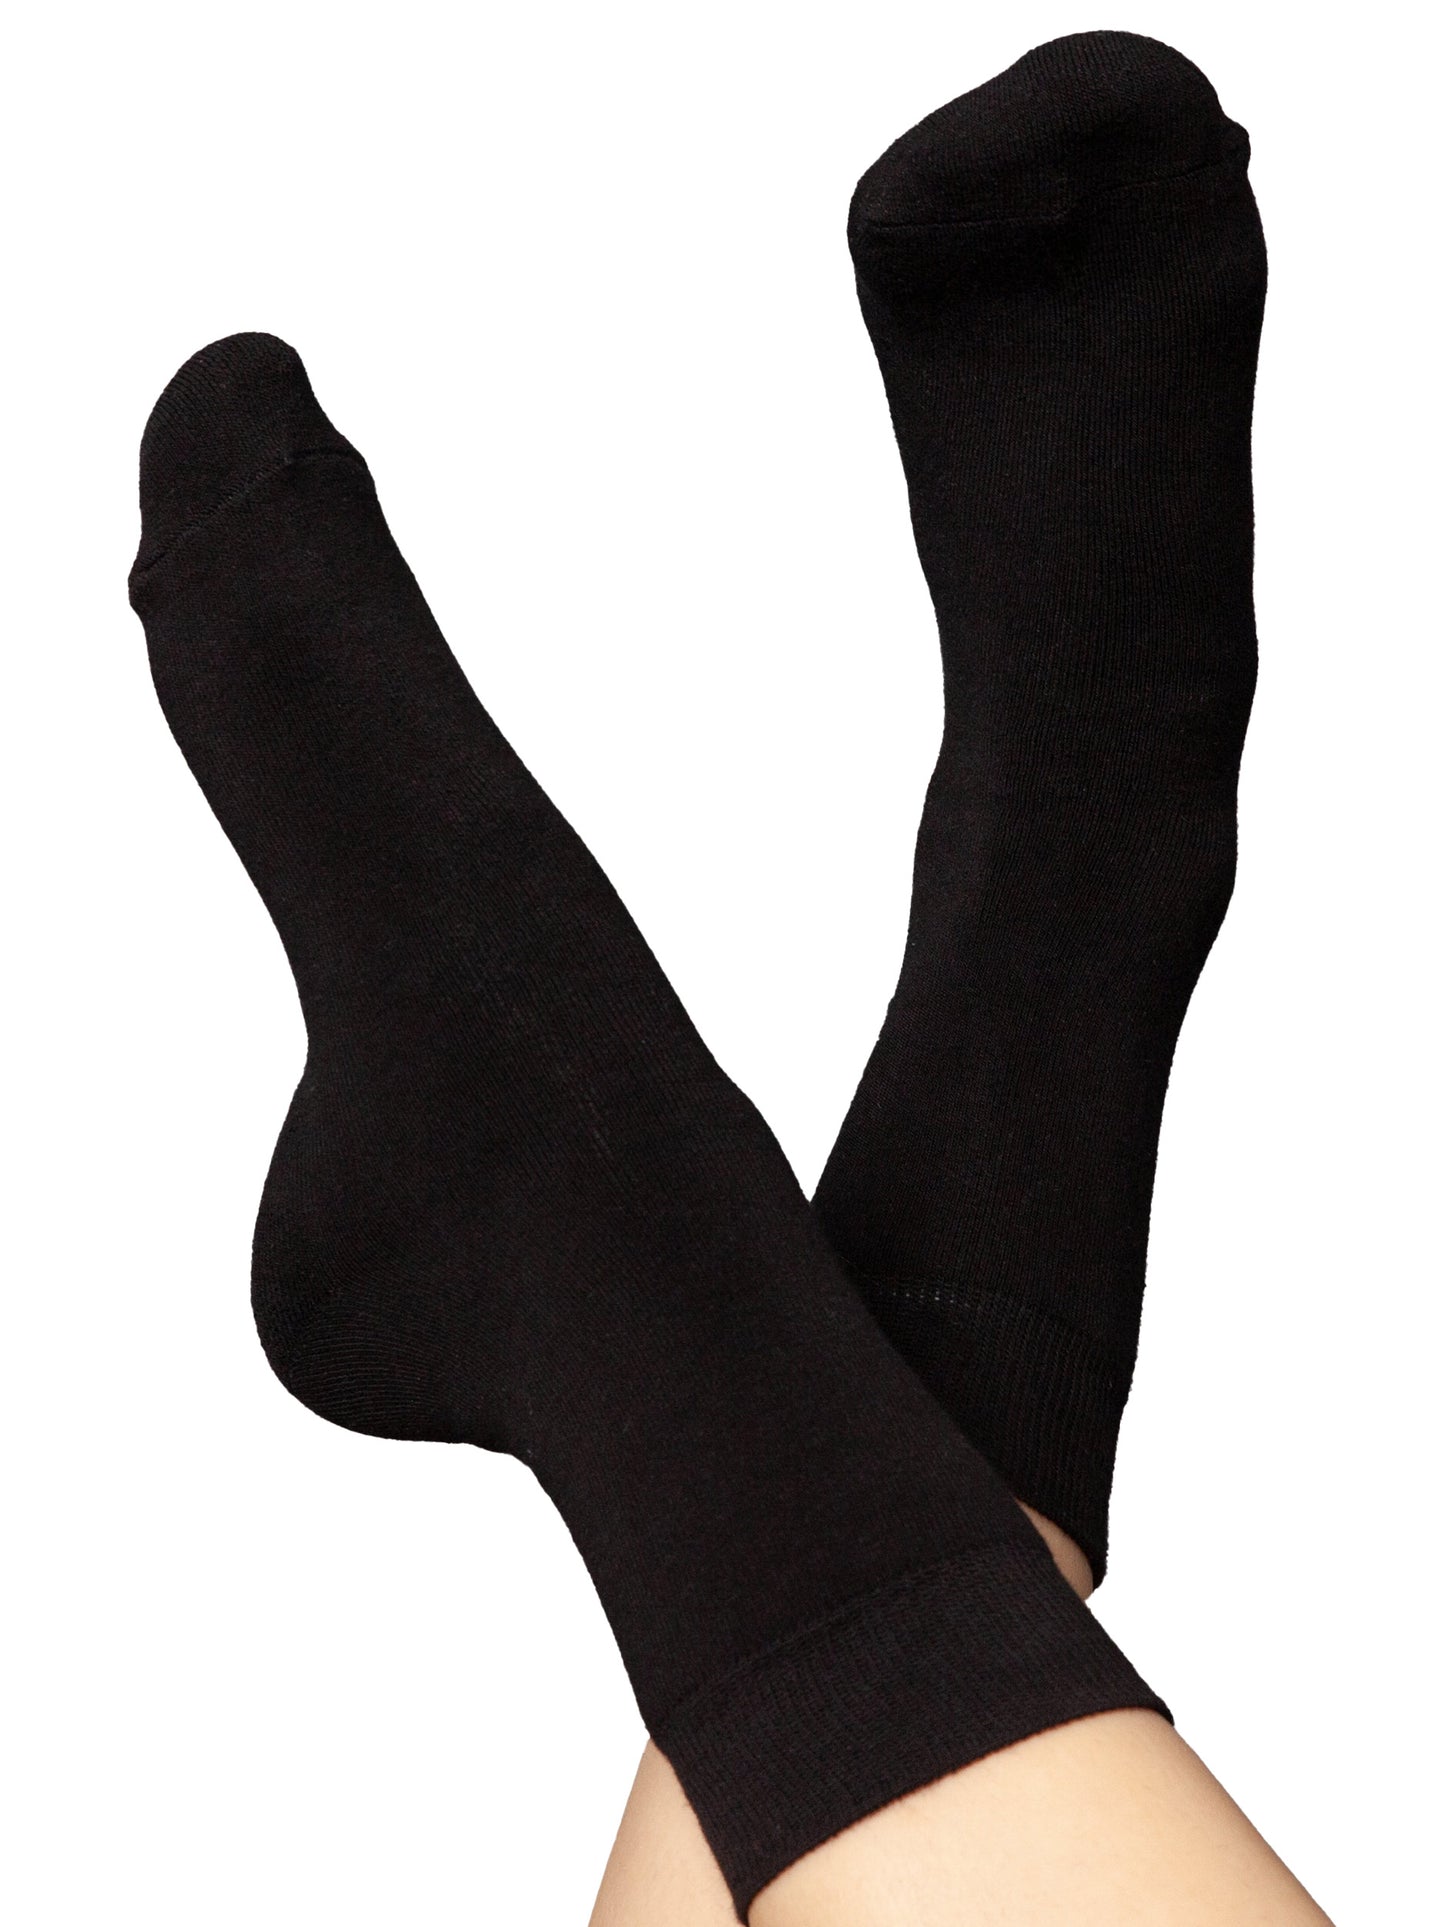 Warm, cuddly socks with organic cotton, black